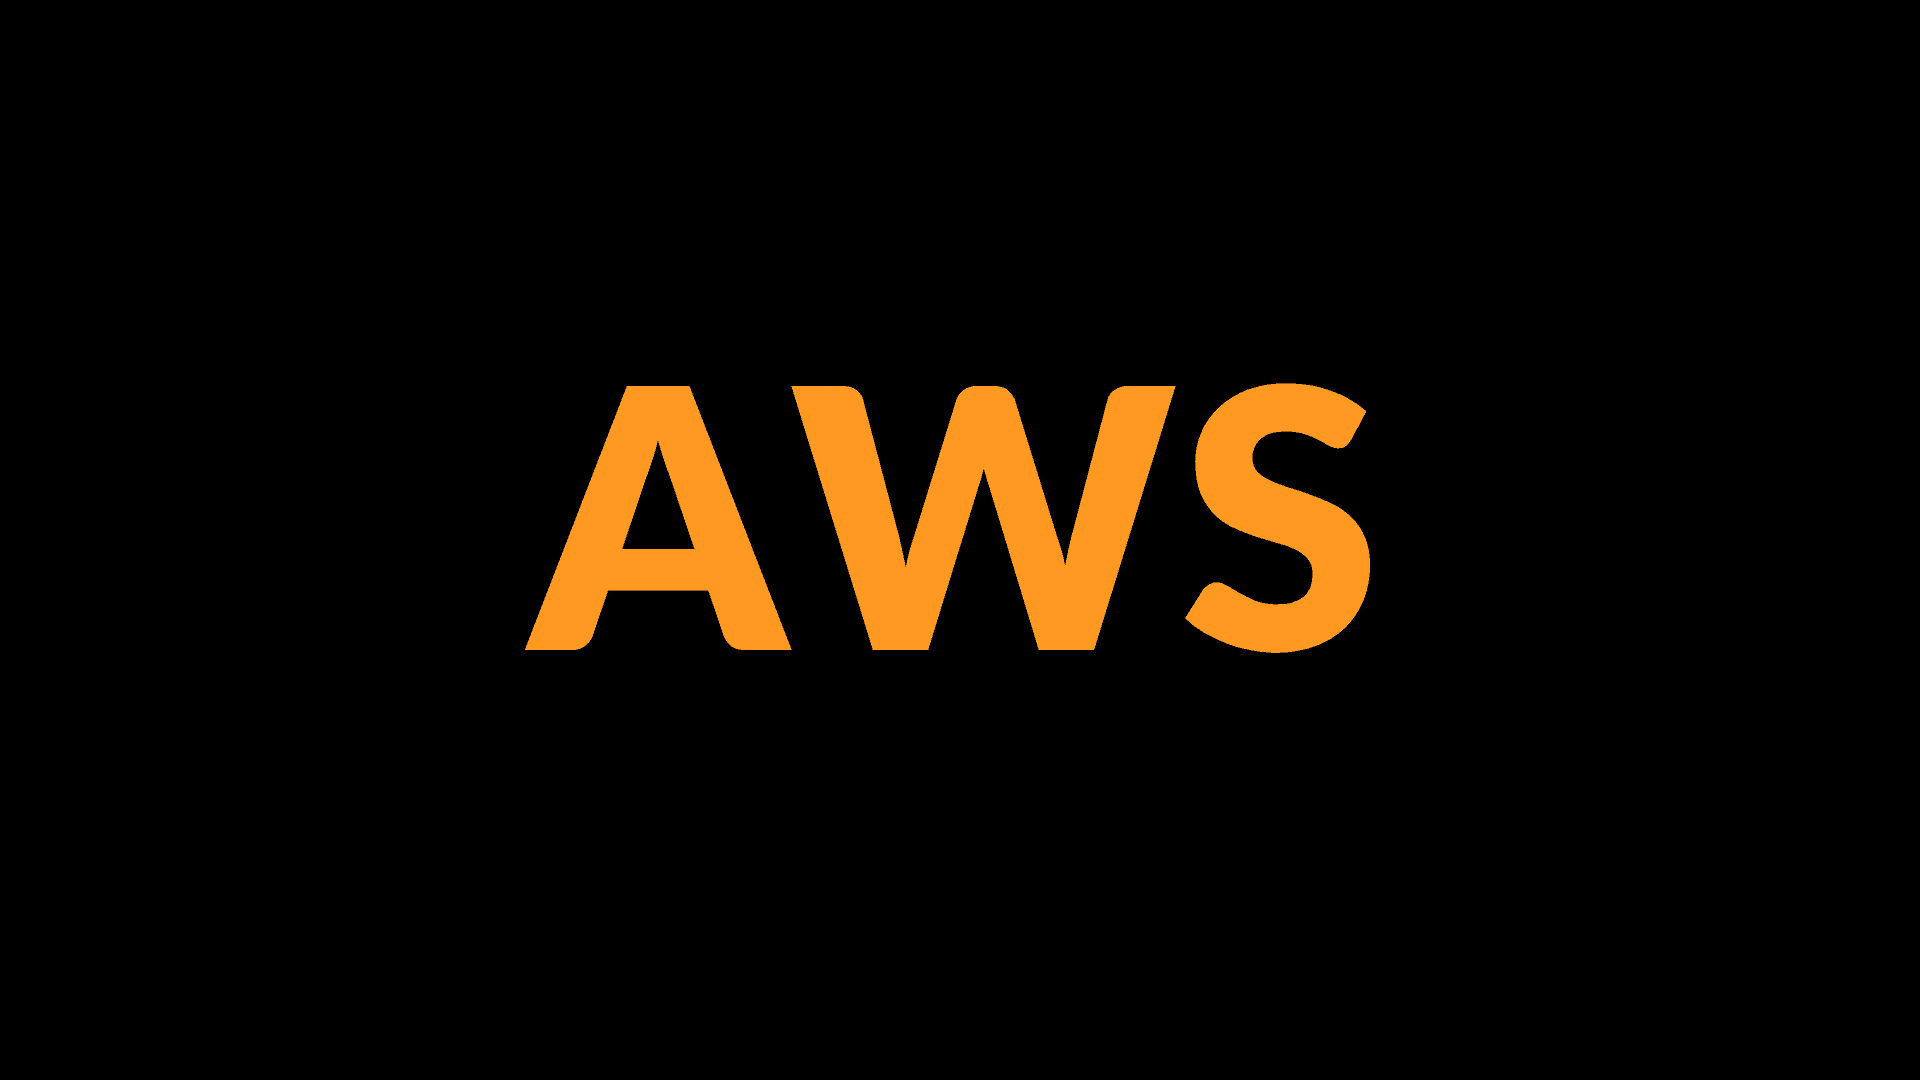 Aws Logo On A Black Background